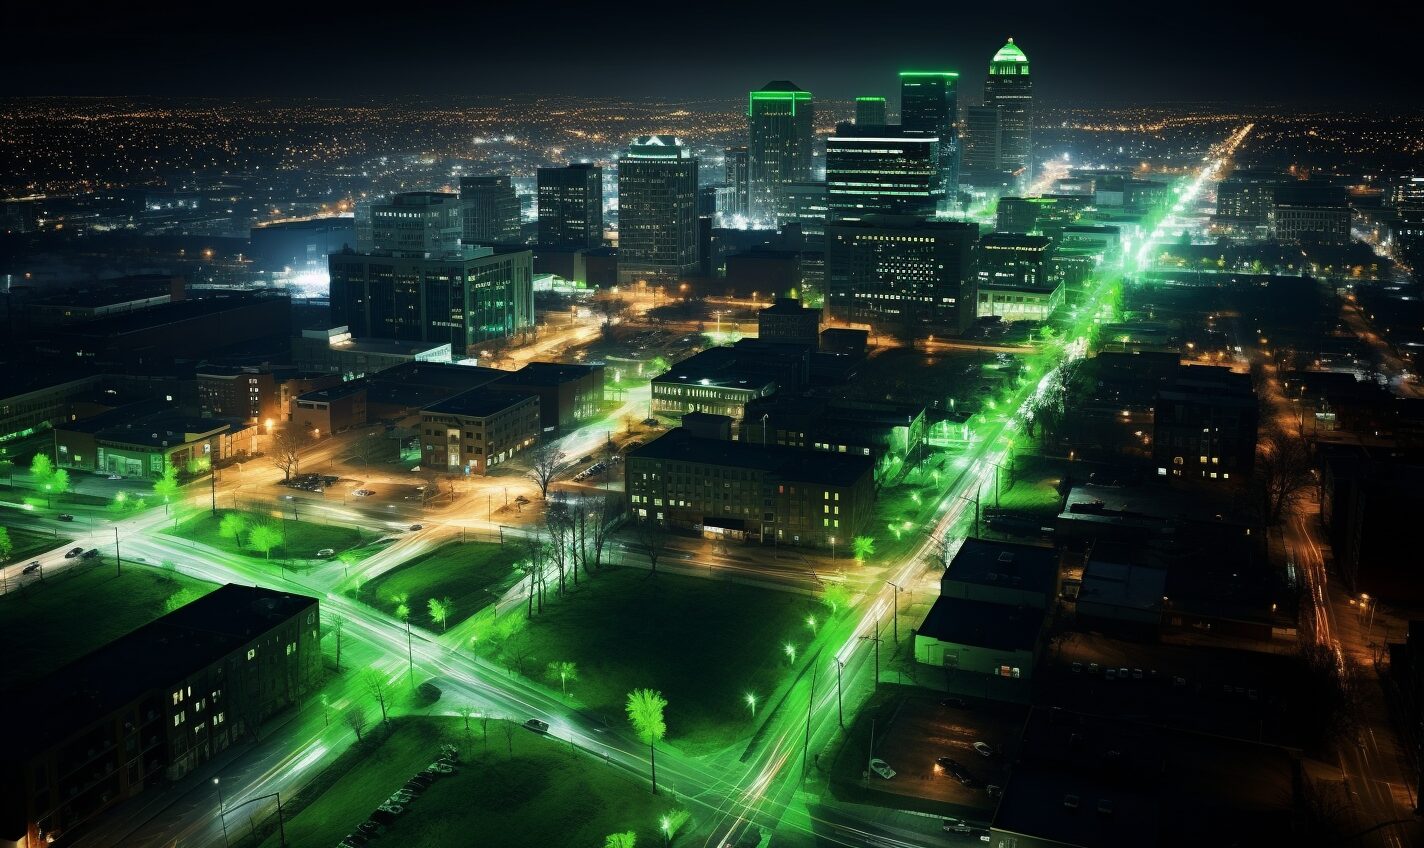 toledo, ohio in a black and neon green glow